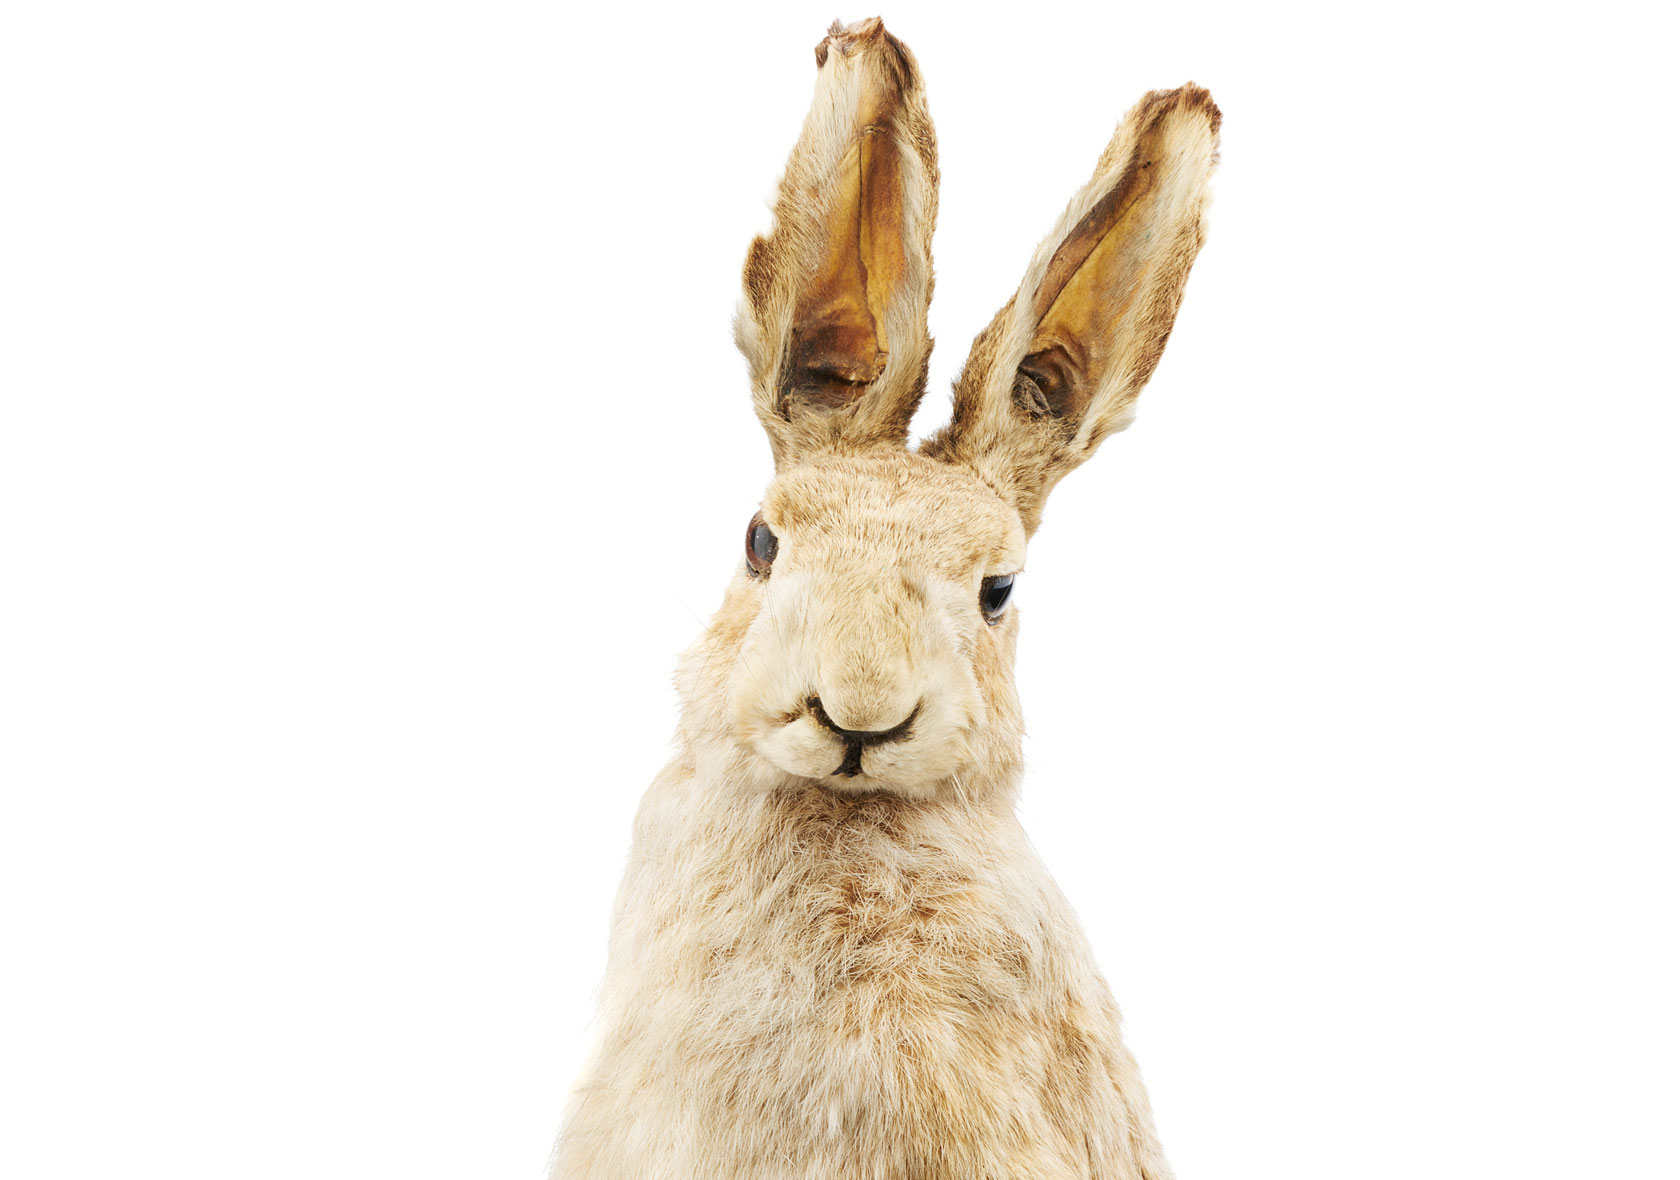 European hare, zoological coll., photo: Axel Killian